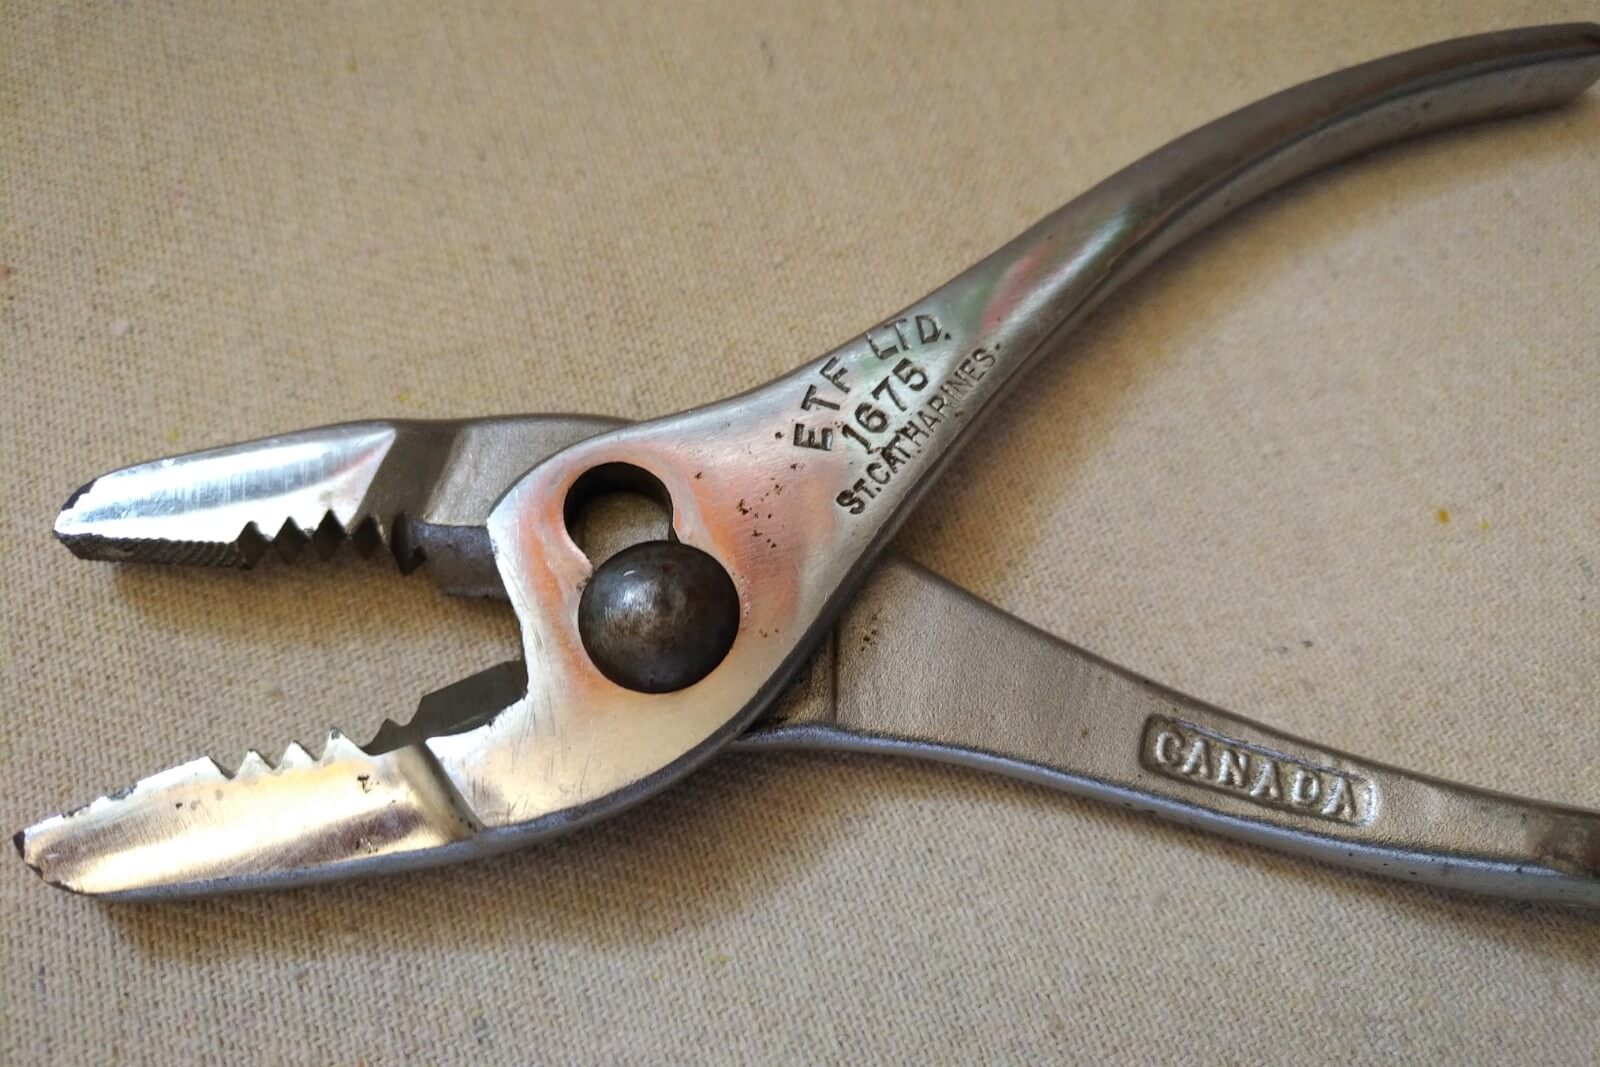 etf-engineering-tool-forging-ltd-7-inch-no-1675-vintage-tools.jpg